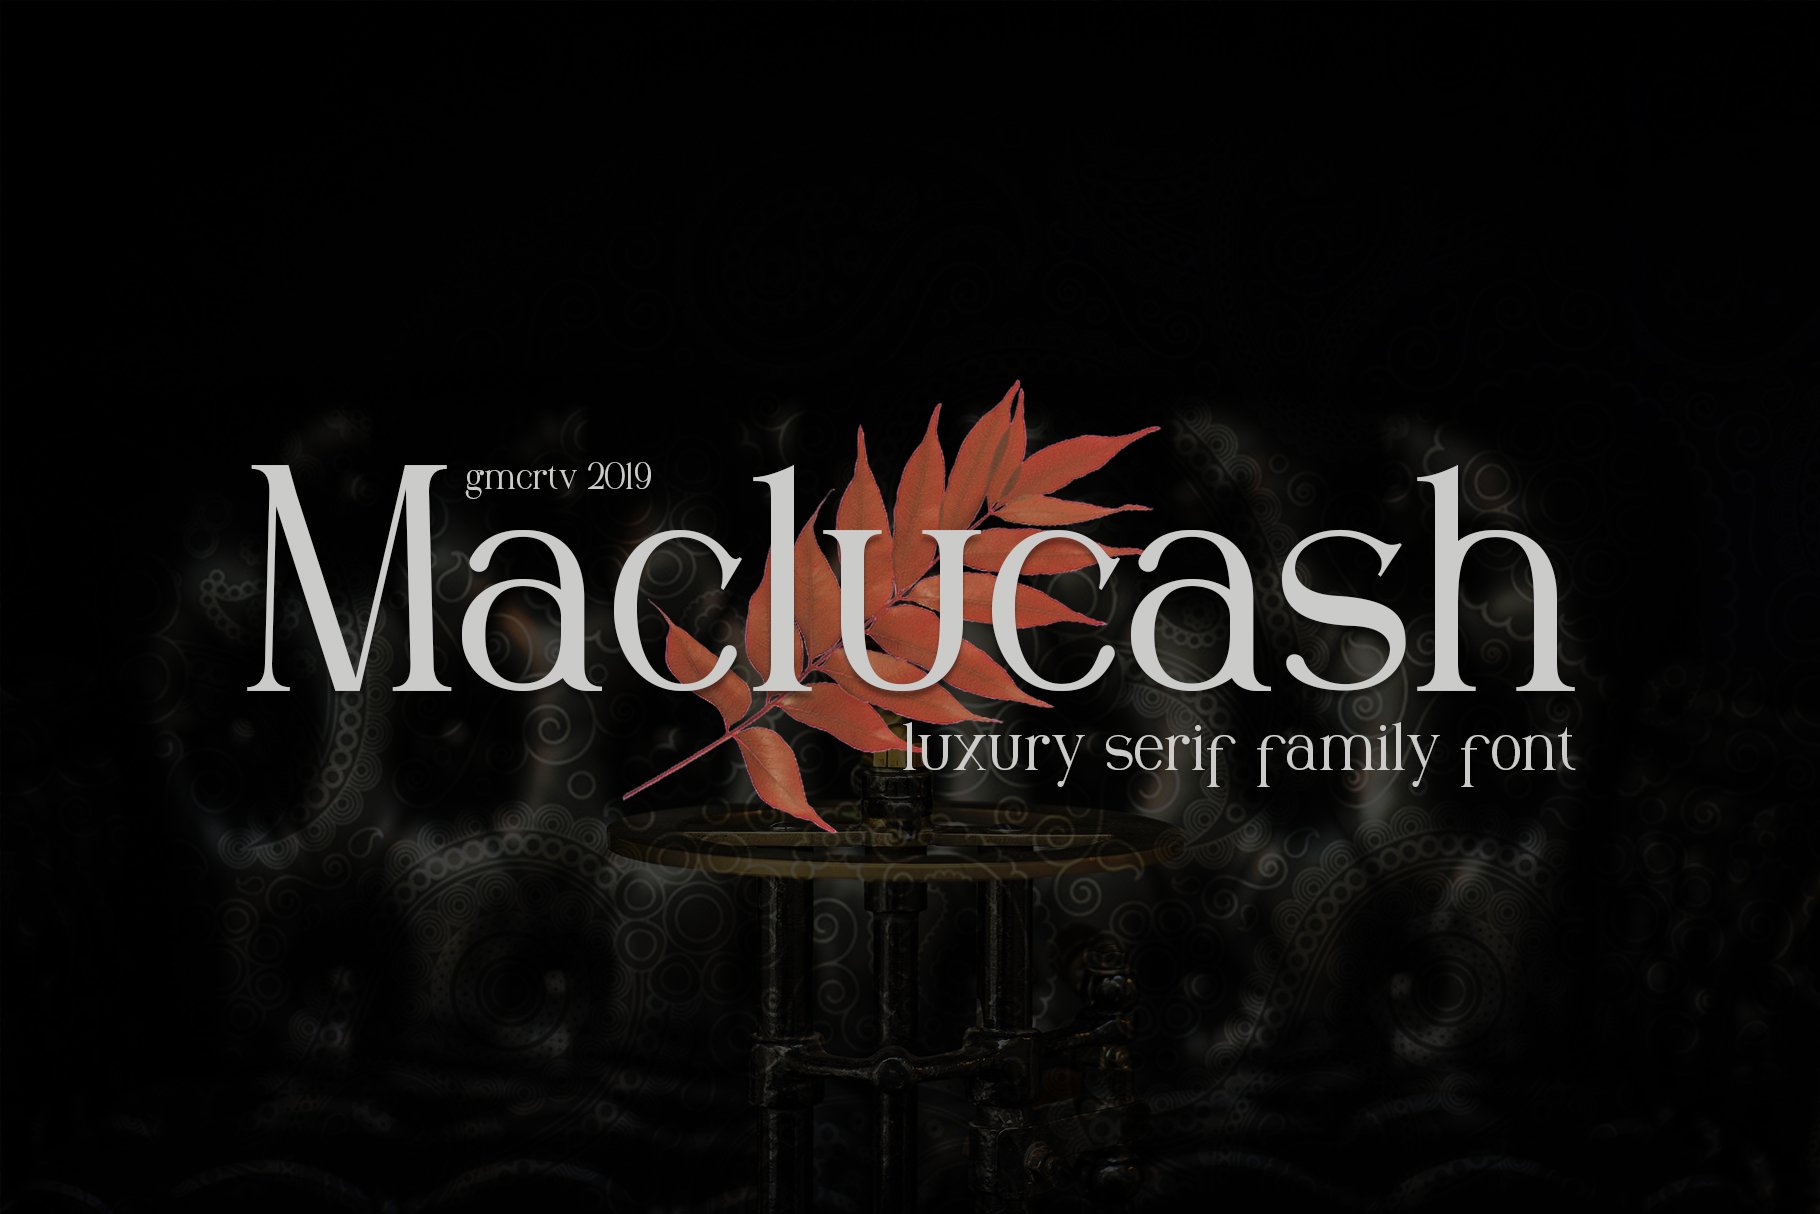 Maclucash cover image.